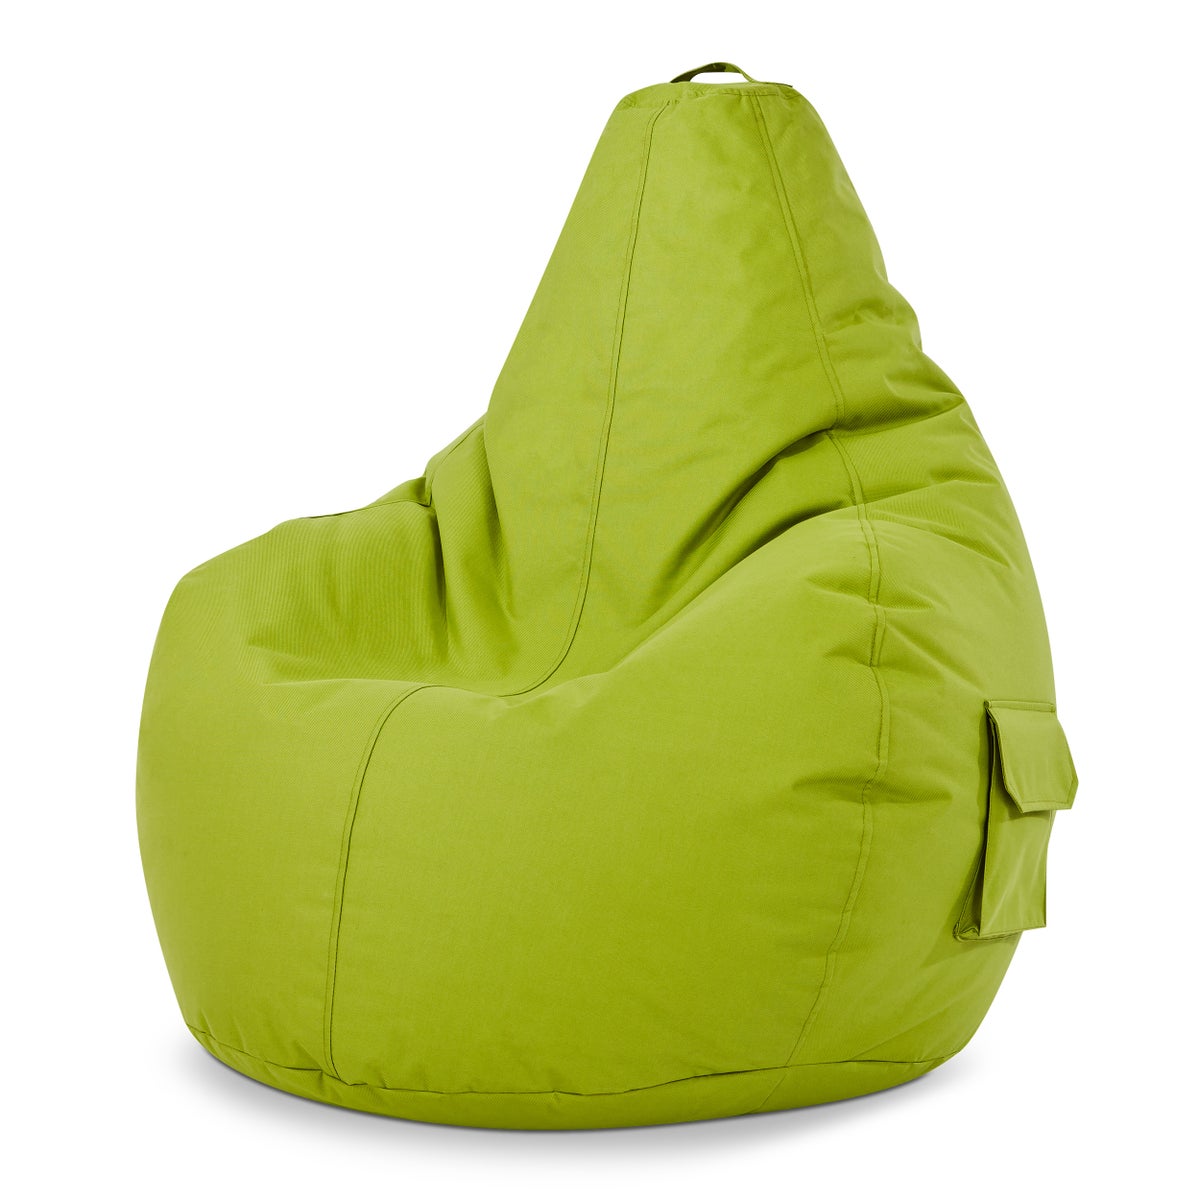 Green Bean© Sitzsack mit Rückenlehne 80x70x90cm - Gaming Chair mit 230L Füllung Kuschelig Weich Waschbar - Bean Bag Bodenkissen Lounge Chair Sitzhocker Relax-Sessel Gamer Gamingstuhl Grün